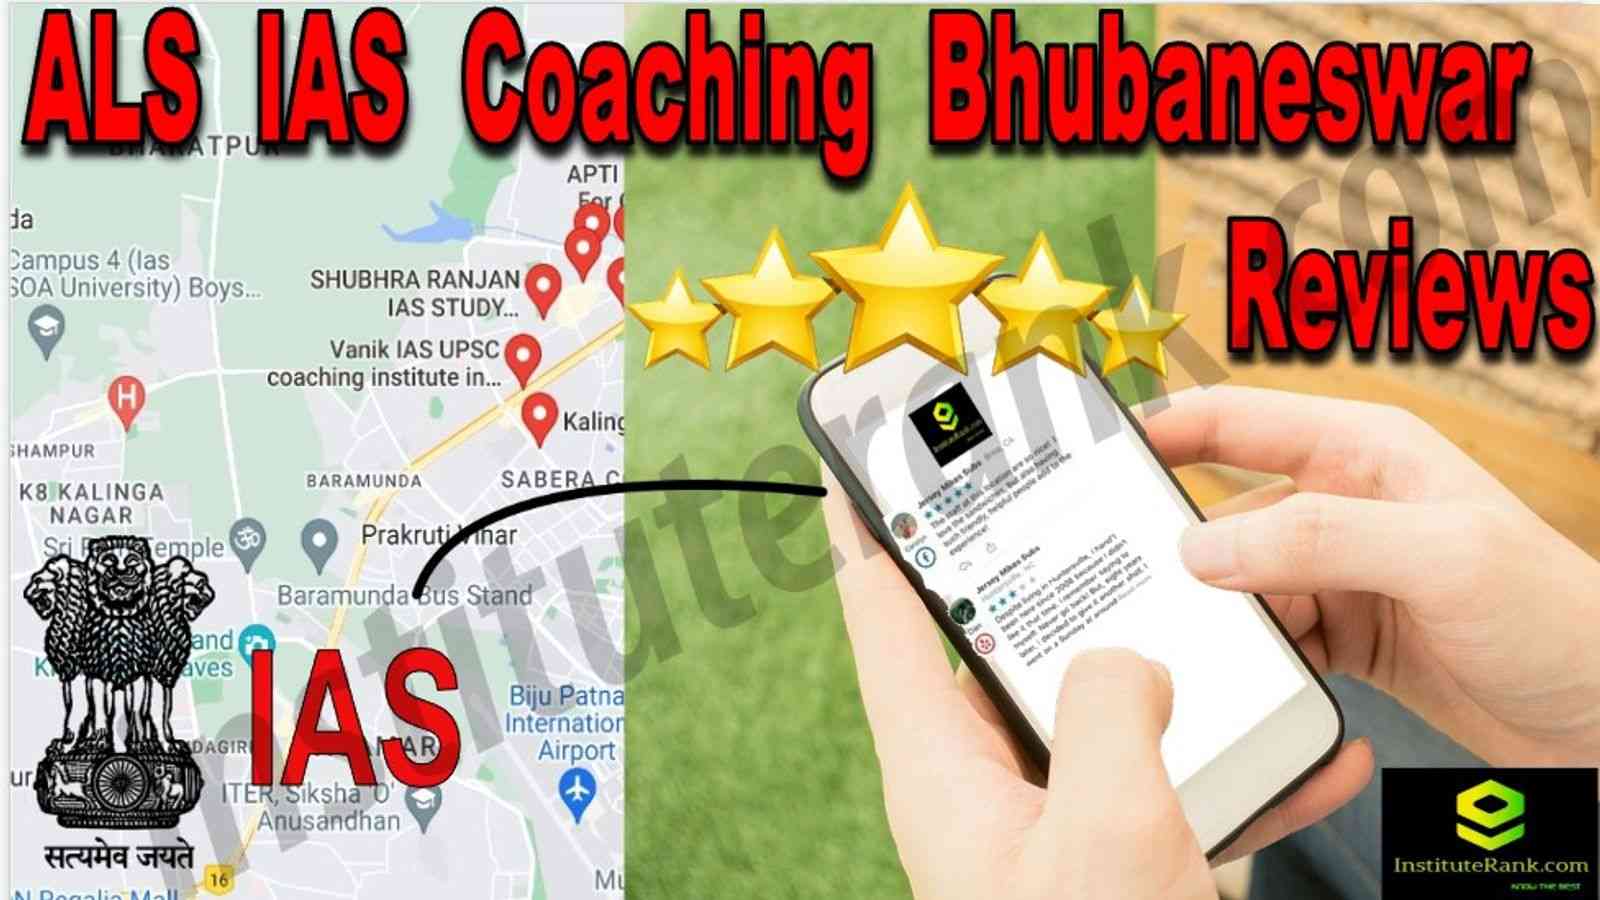 ALS IAS Coaching Bhubaneswar Reviews